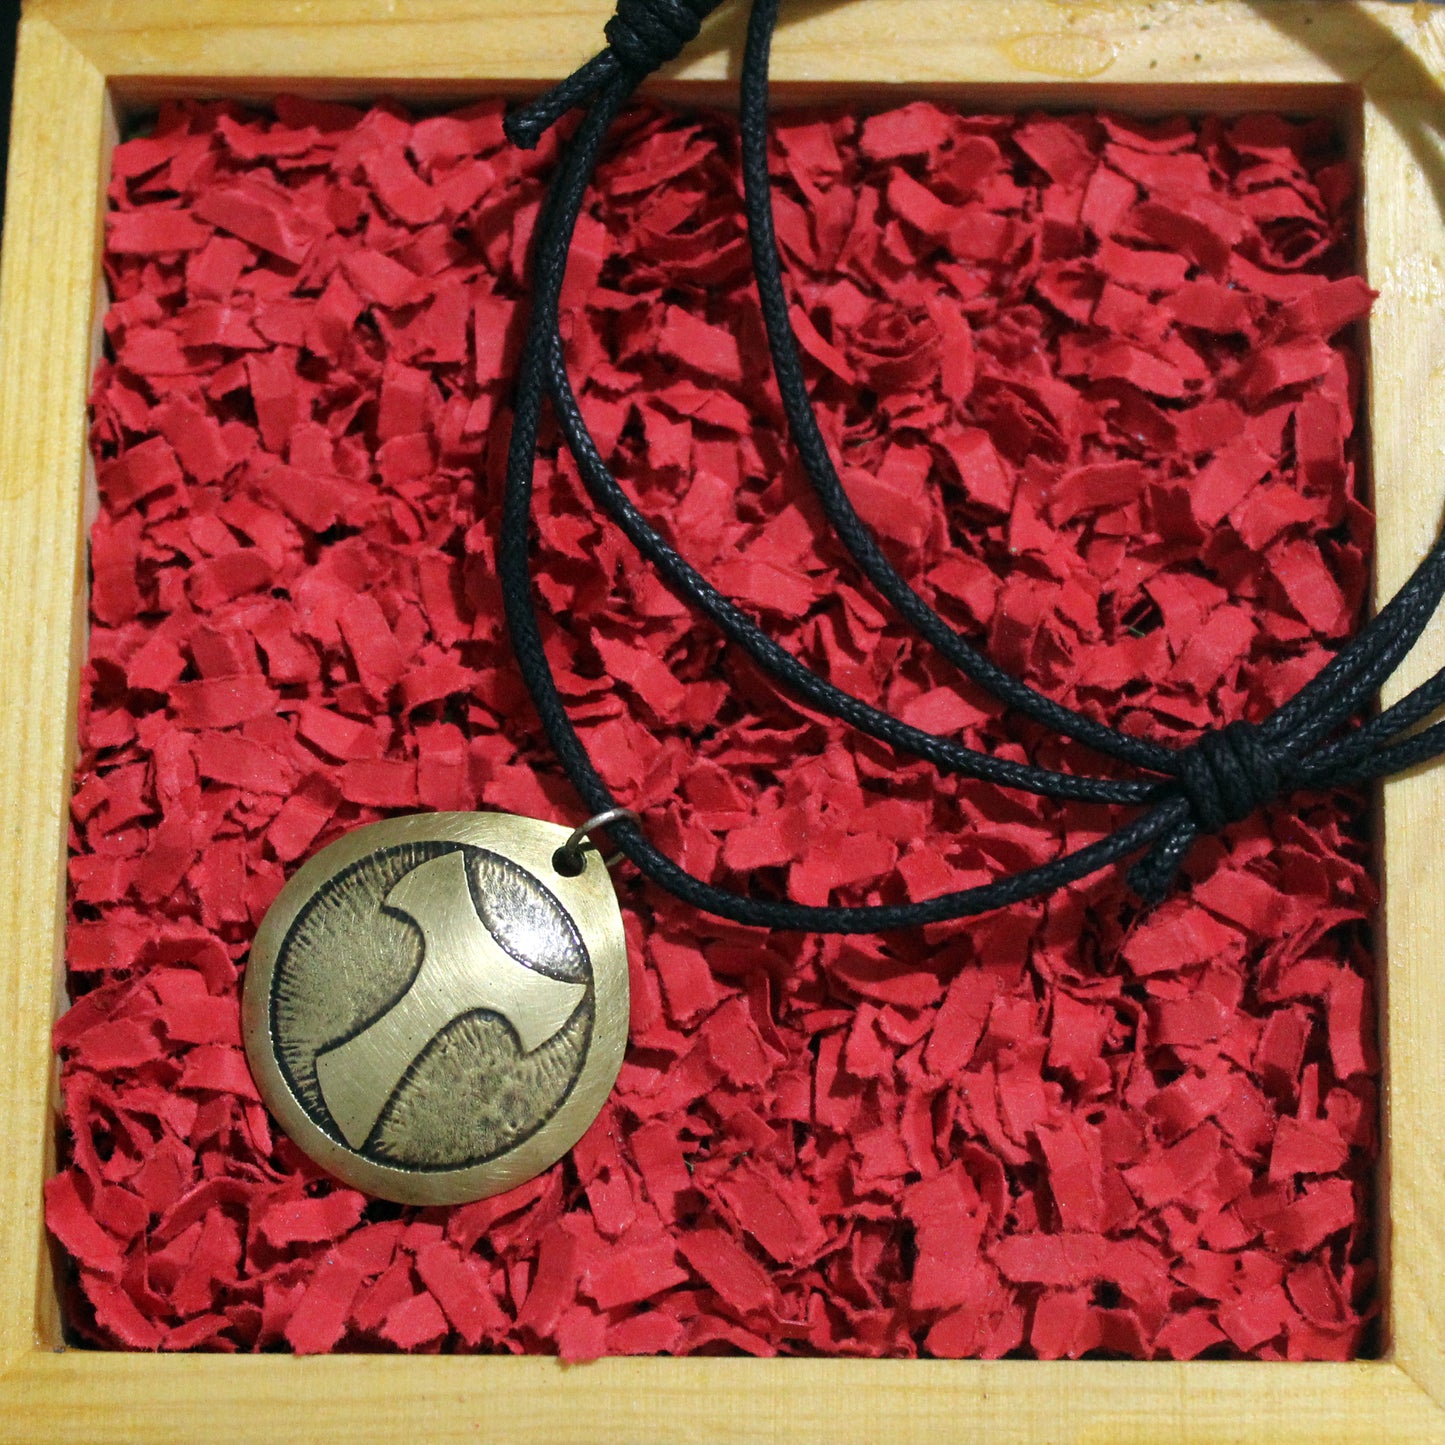 Tau of the Camino de Santiago brass pendant